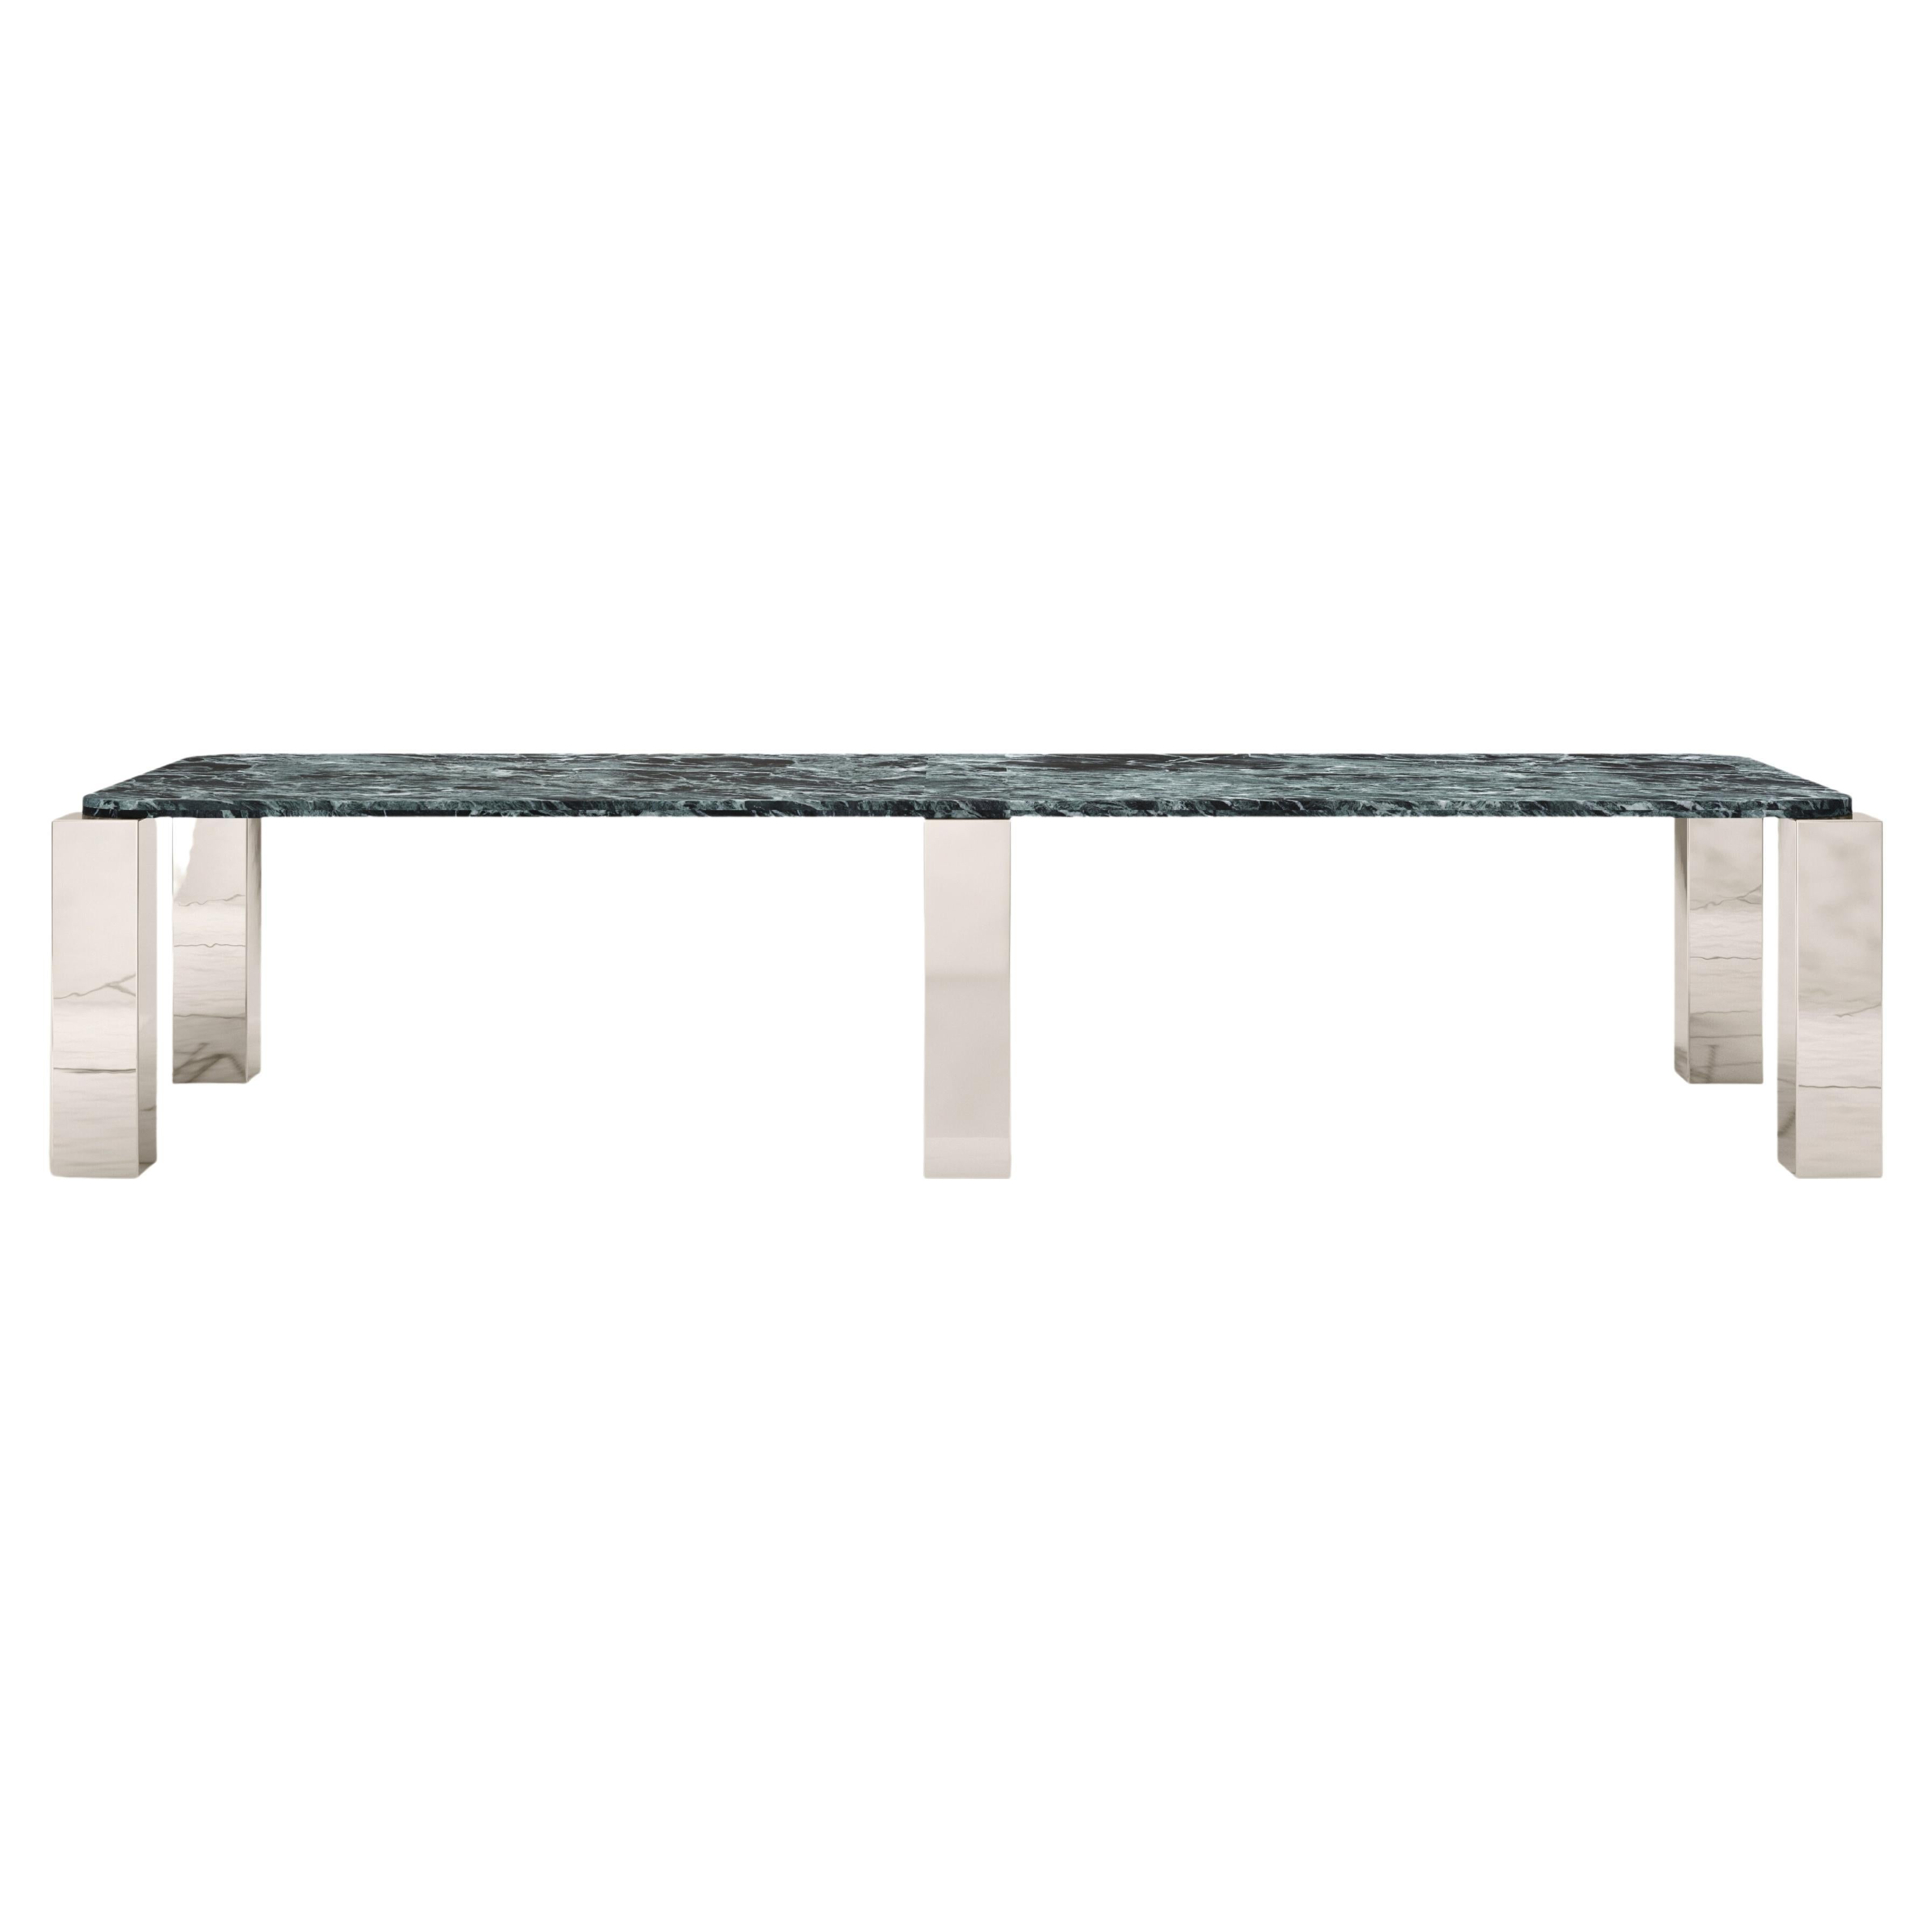 FORM(LA) Cubo Rectangle Dining Table 146”L x 50”W x 30”H Verde Marble & Chrome